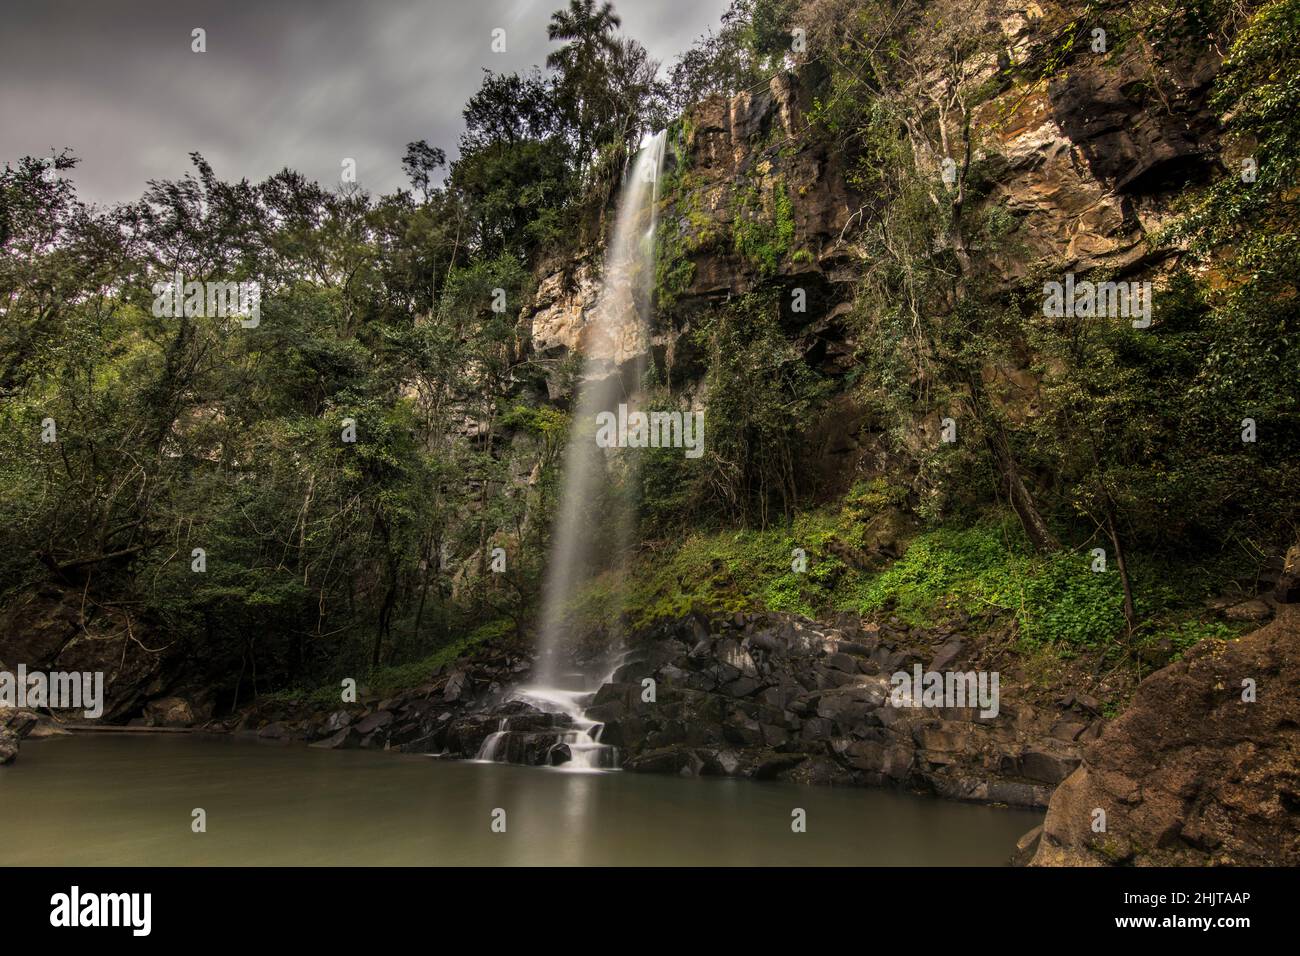 Sutile water drop in Cataratas del Iguazú National Park, called Salto Escondido (hidden jump) between the jungle forest in Misiones, Argentina Stock Photo